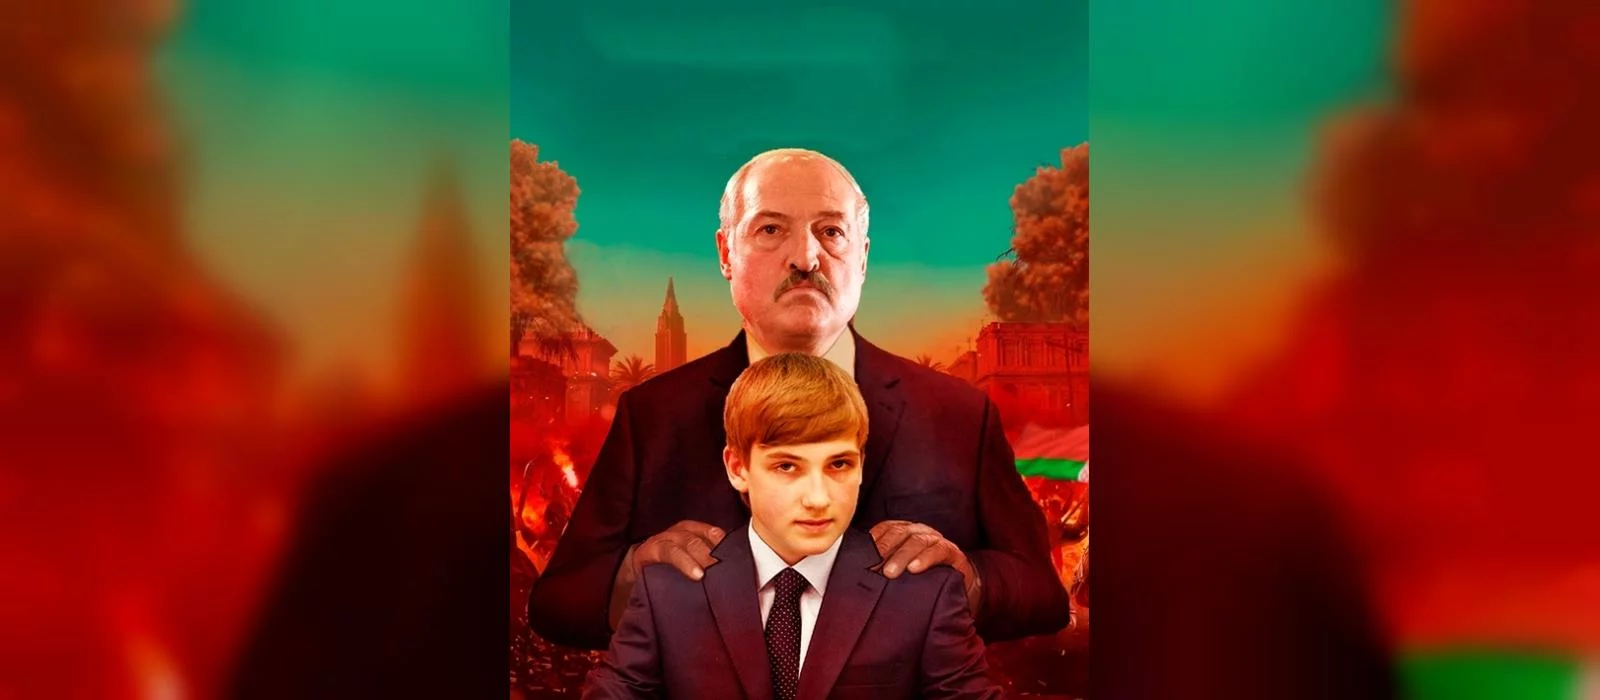 Батька у нас крутой слушать. Фар край 6 Лукашенко. Far Cry Лукашенко. Эль президенто far Cry 6. Фар край 6 Лукашенко с сыном.